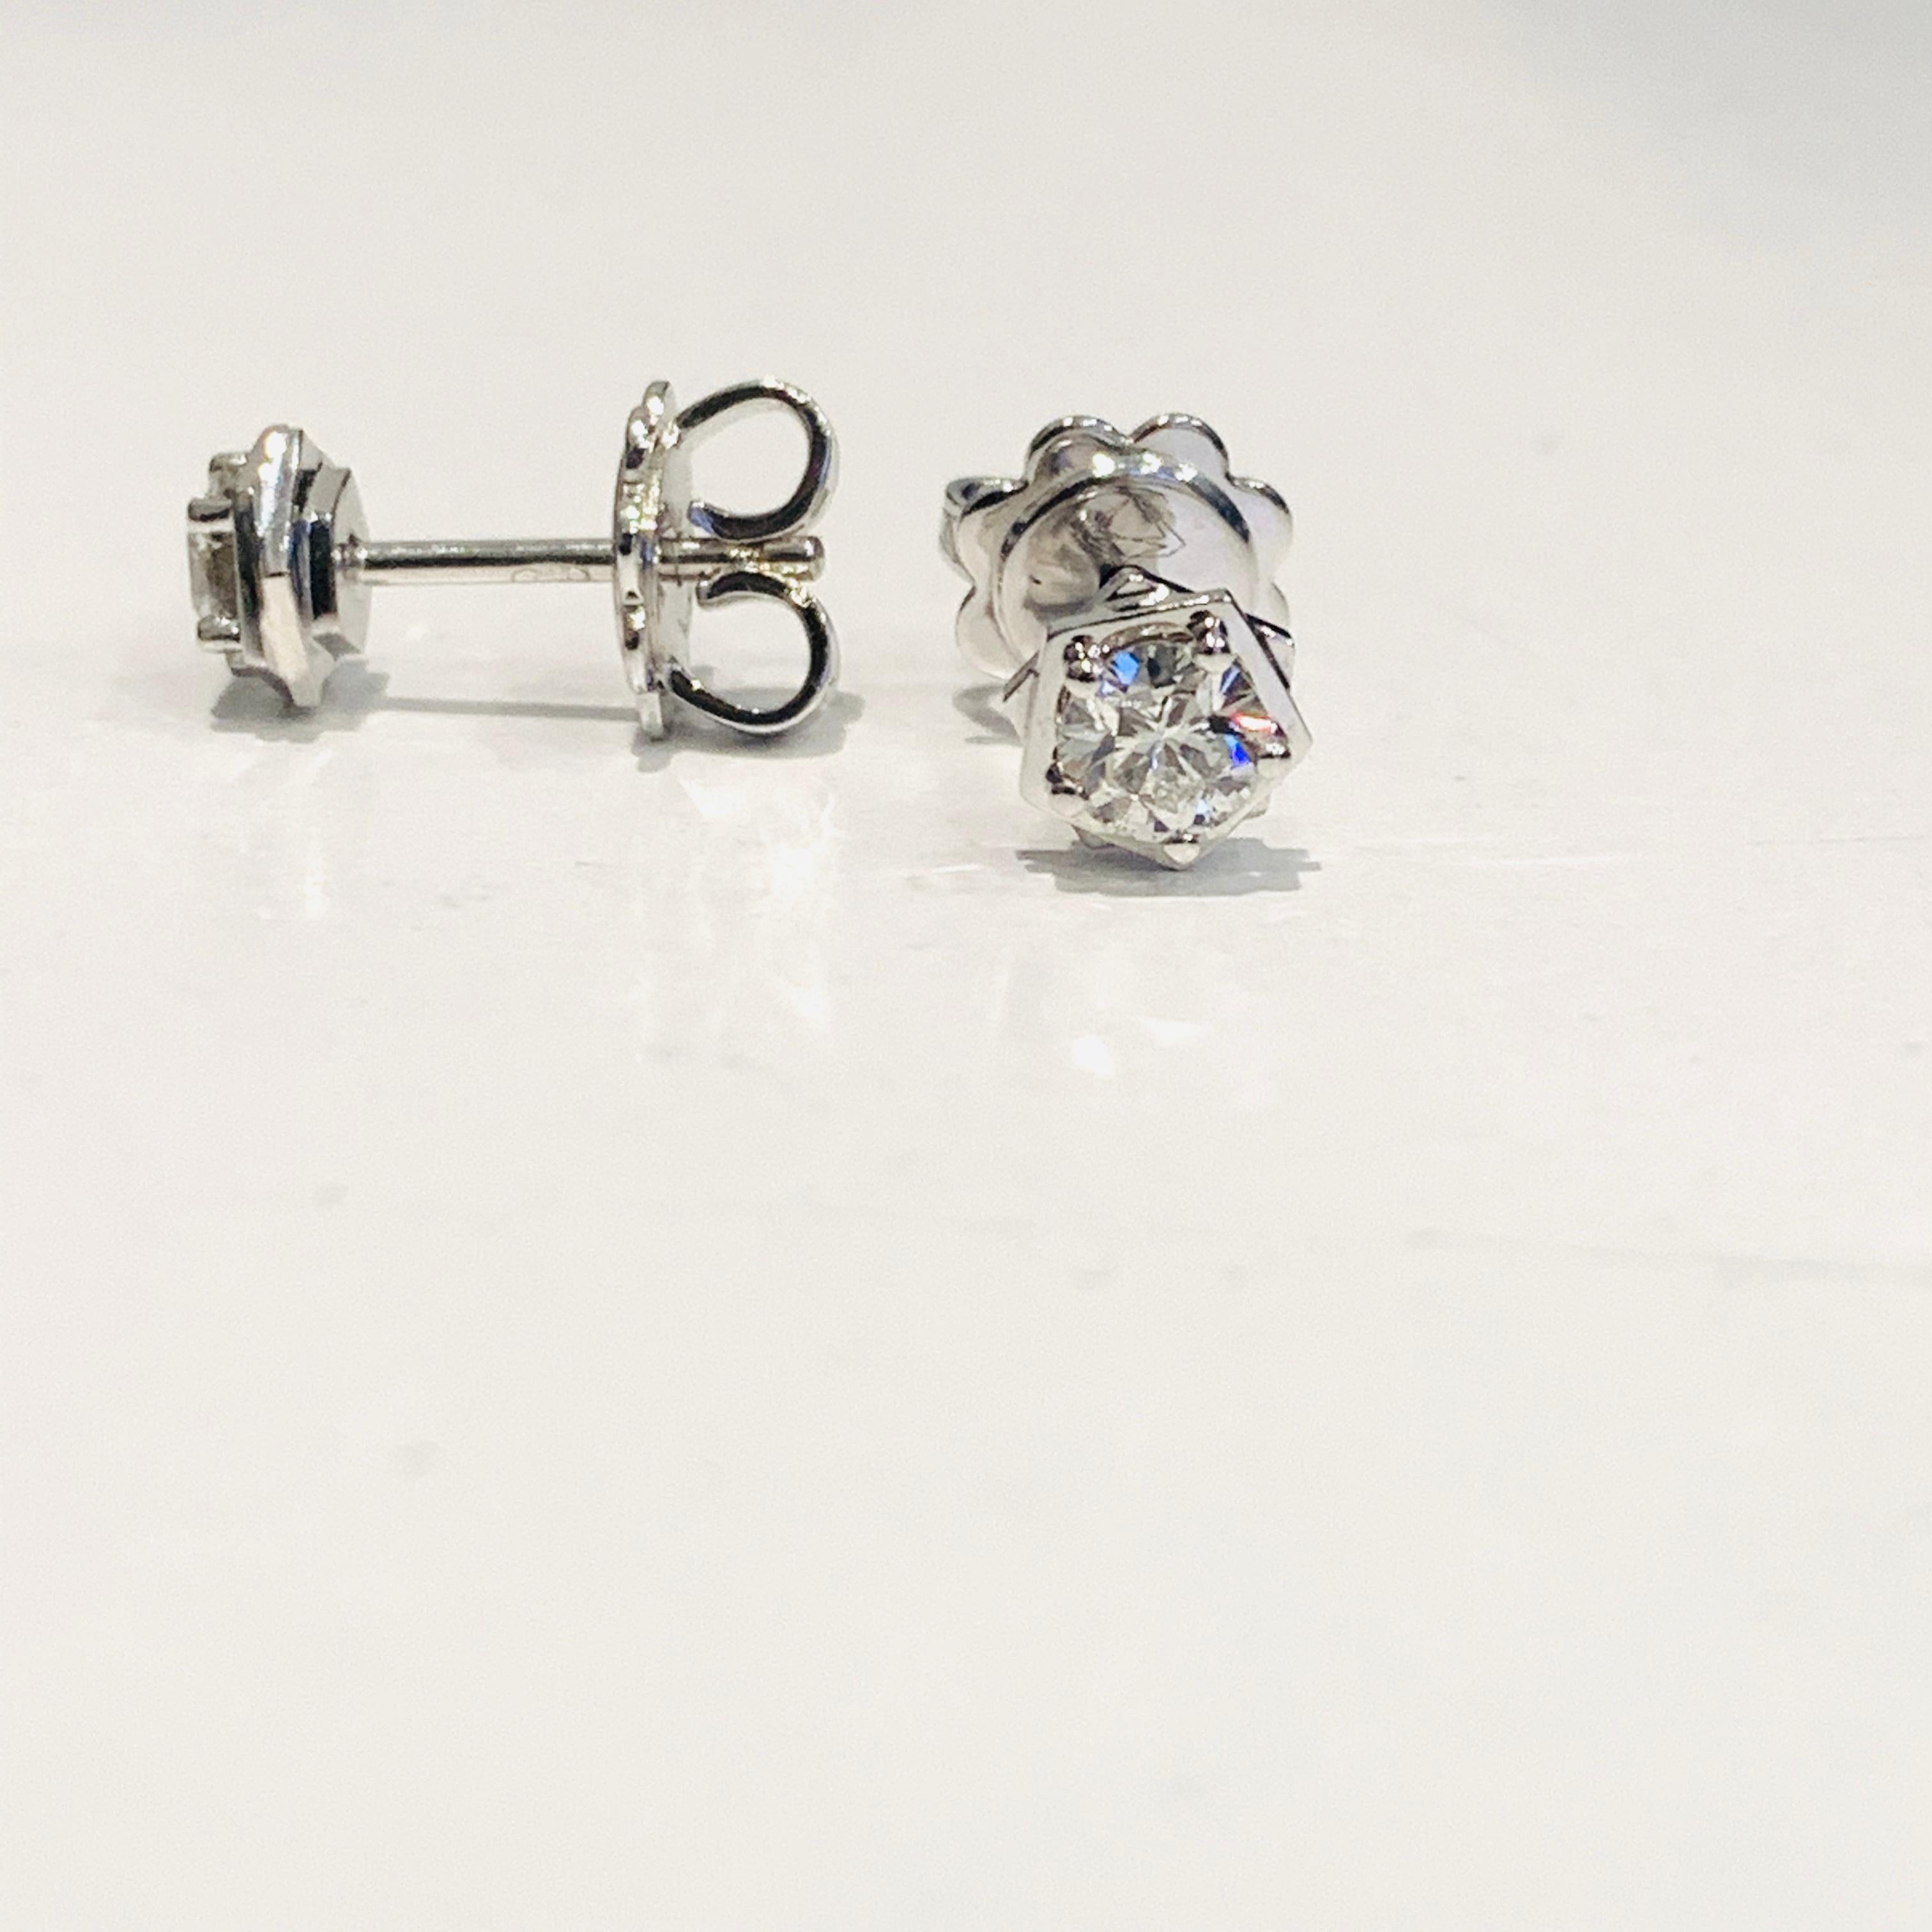 Brilliant Cut 0.48 Carat Diamonds set in 18Kt White Gold Leonardo Vitruvian Stud Earrings 